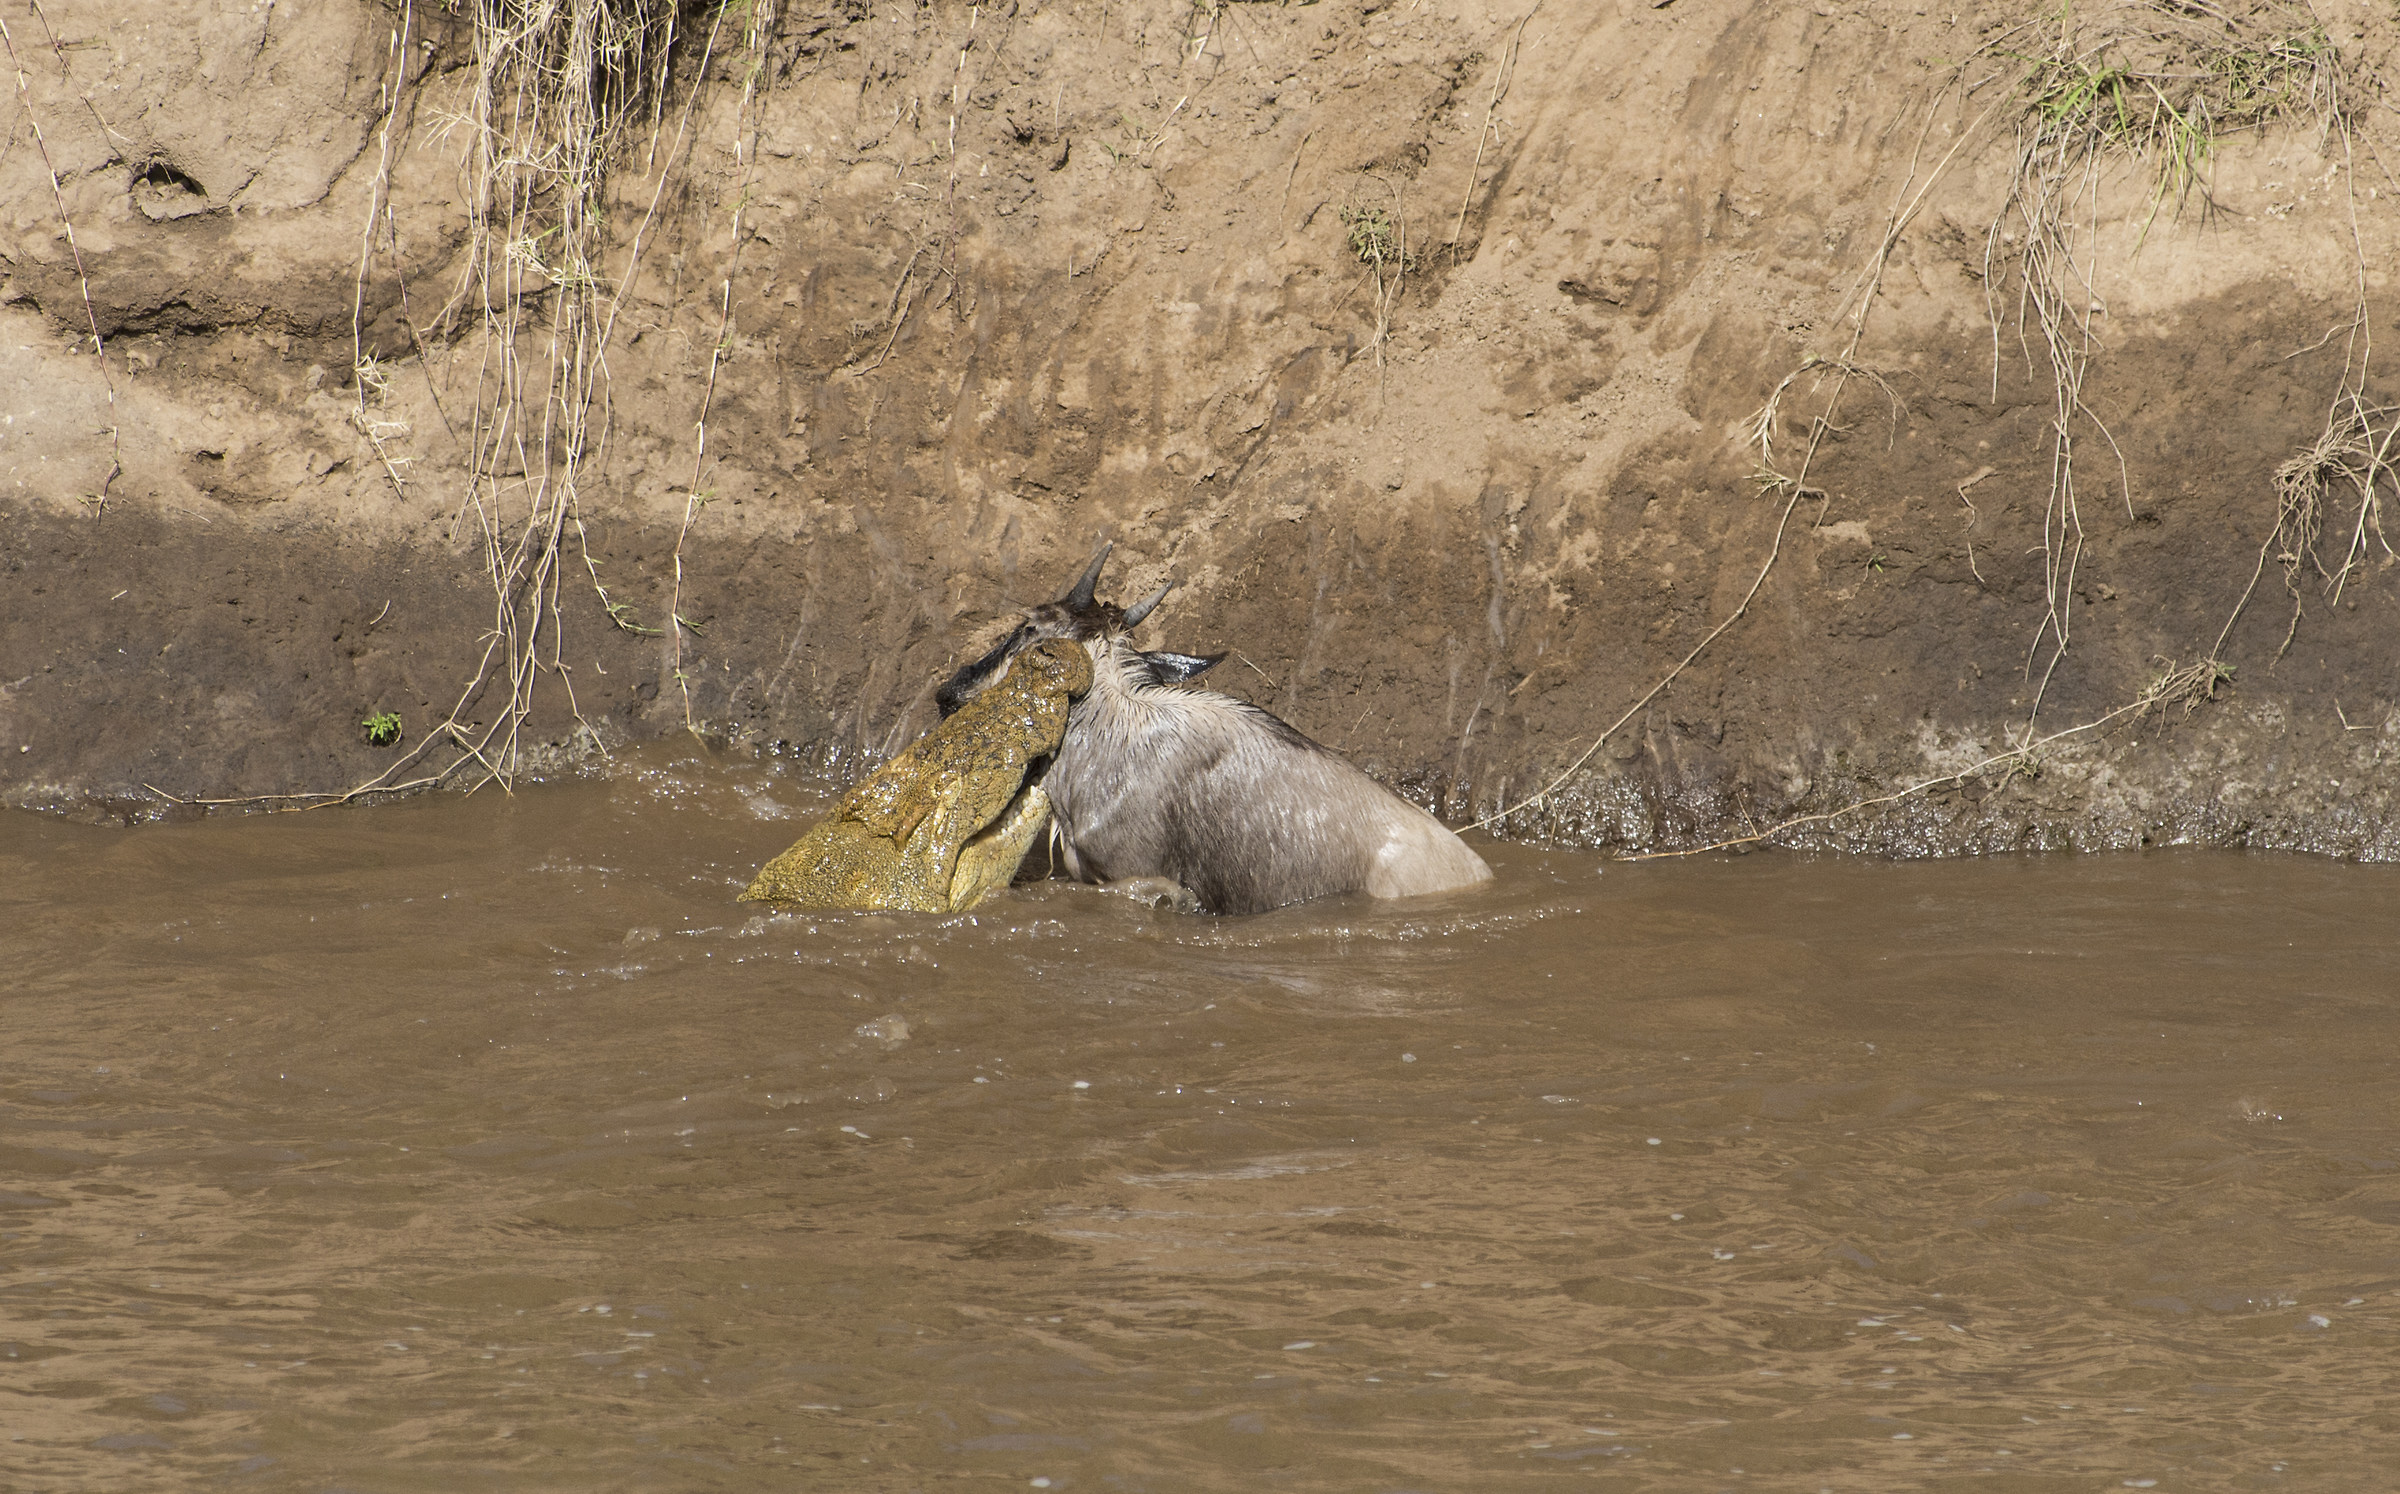 Mara River crocodile with wildebeest...